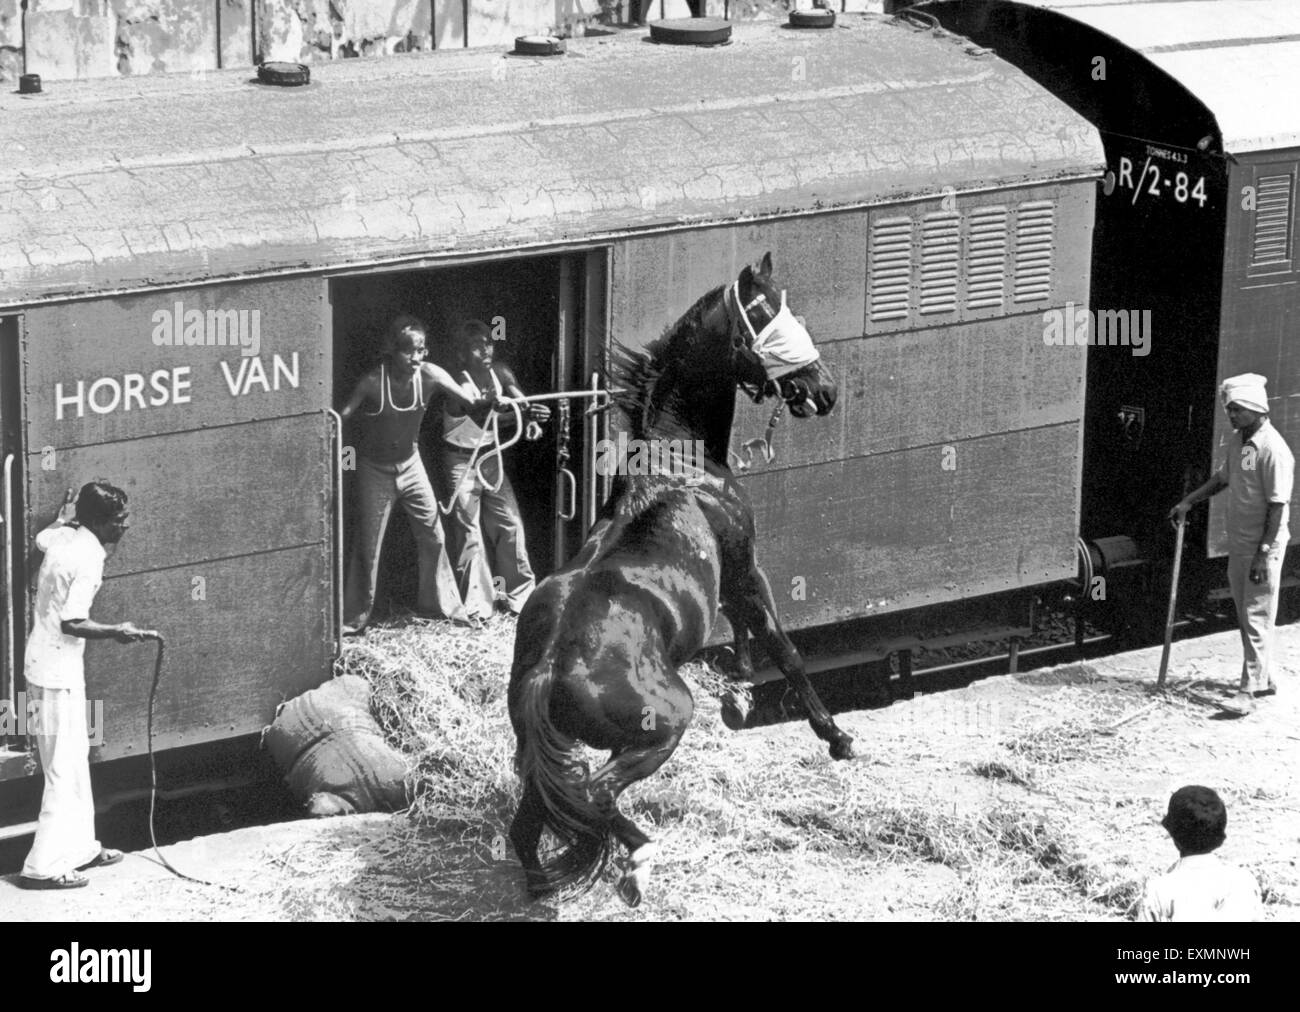 People coaxing struggle horse into horses train van mumbai India Stock Photo